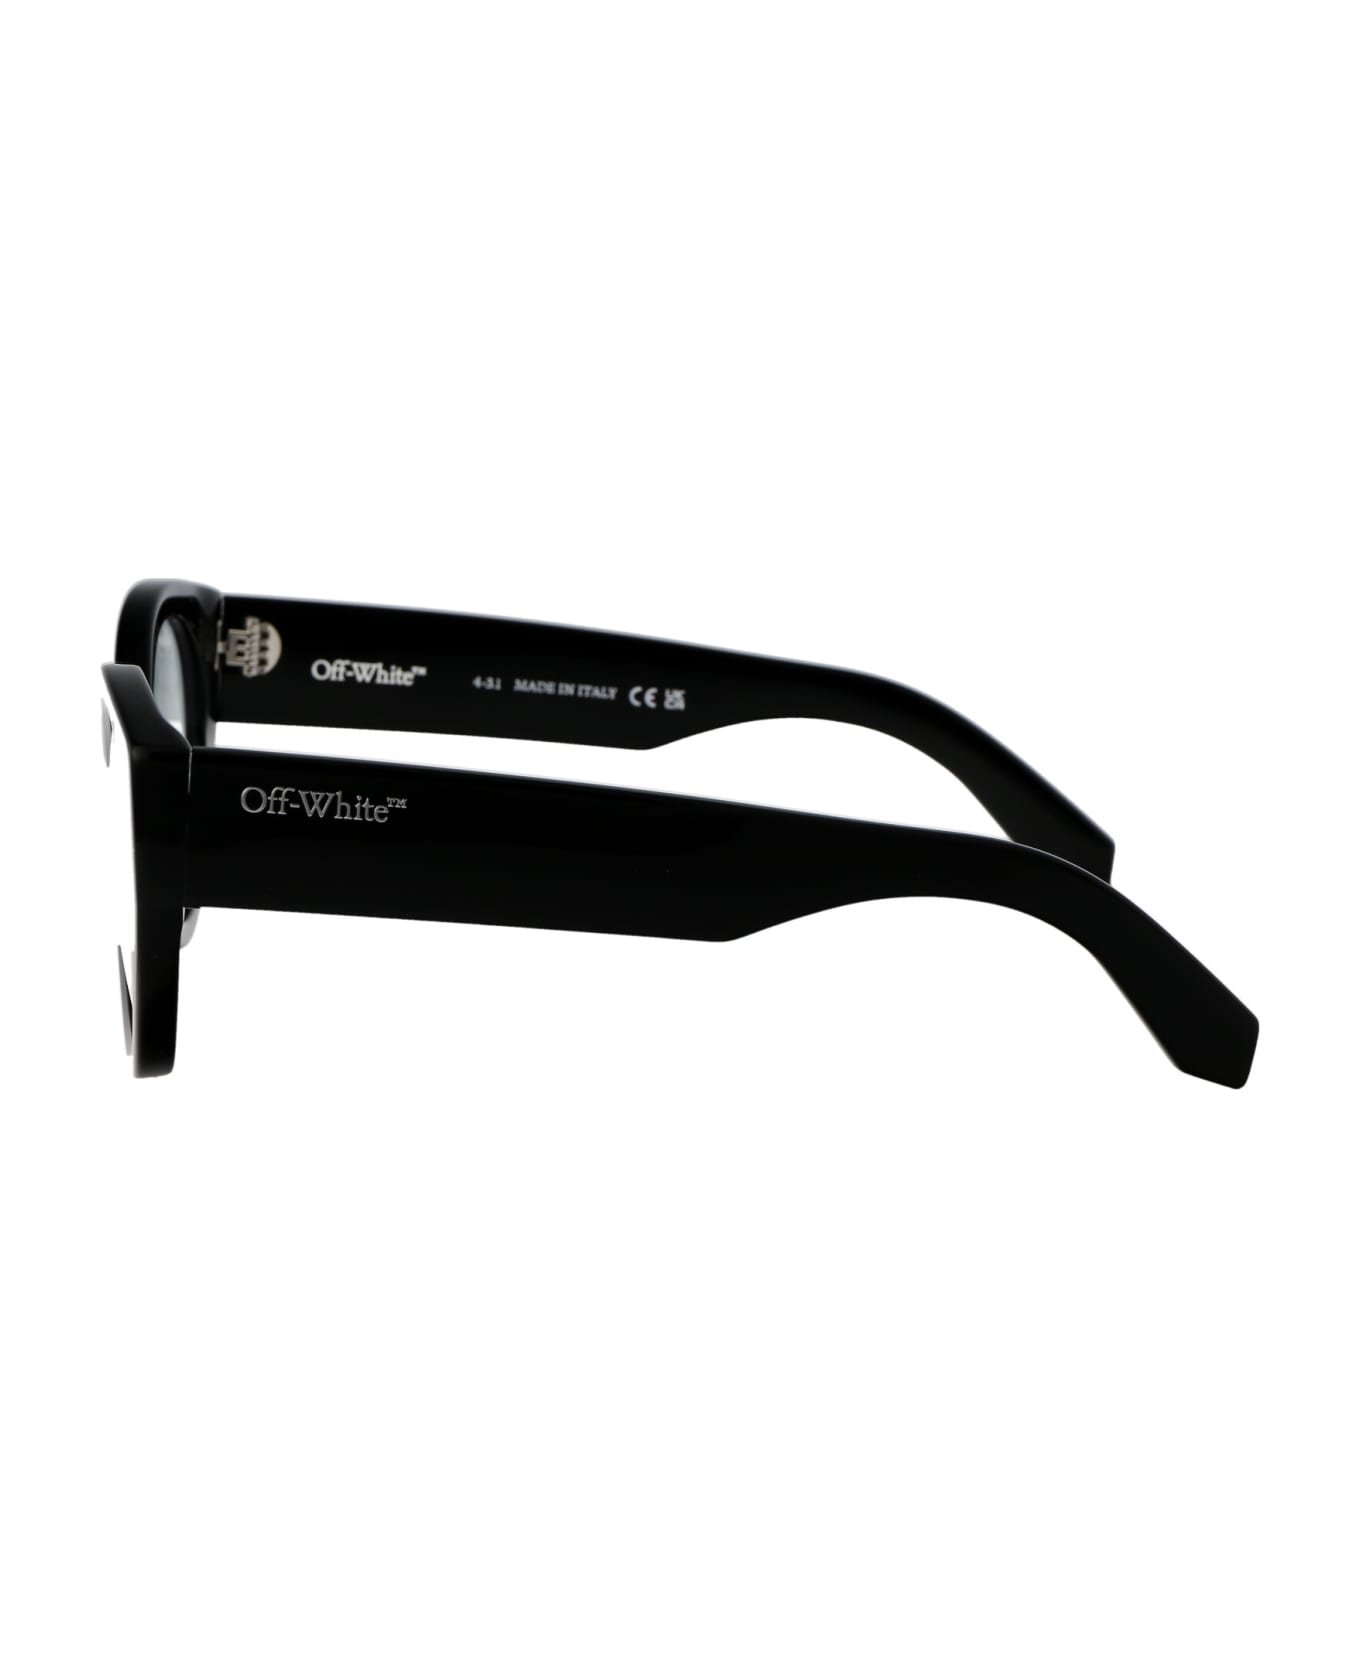 Off-White Optical Style 41 Glasses - 1000 BLACK